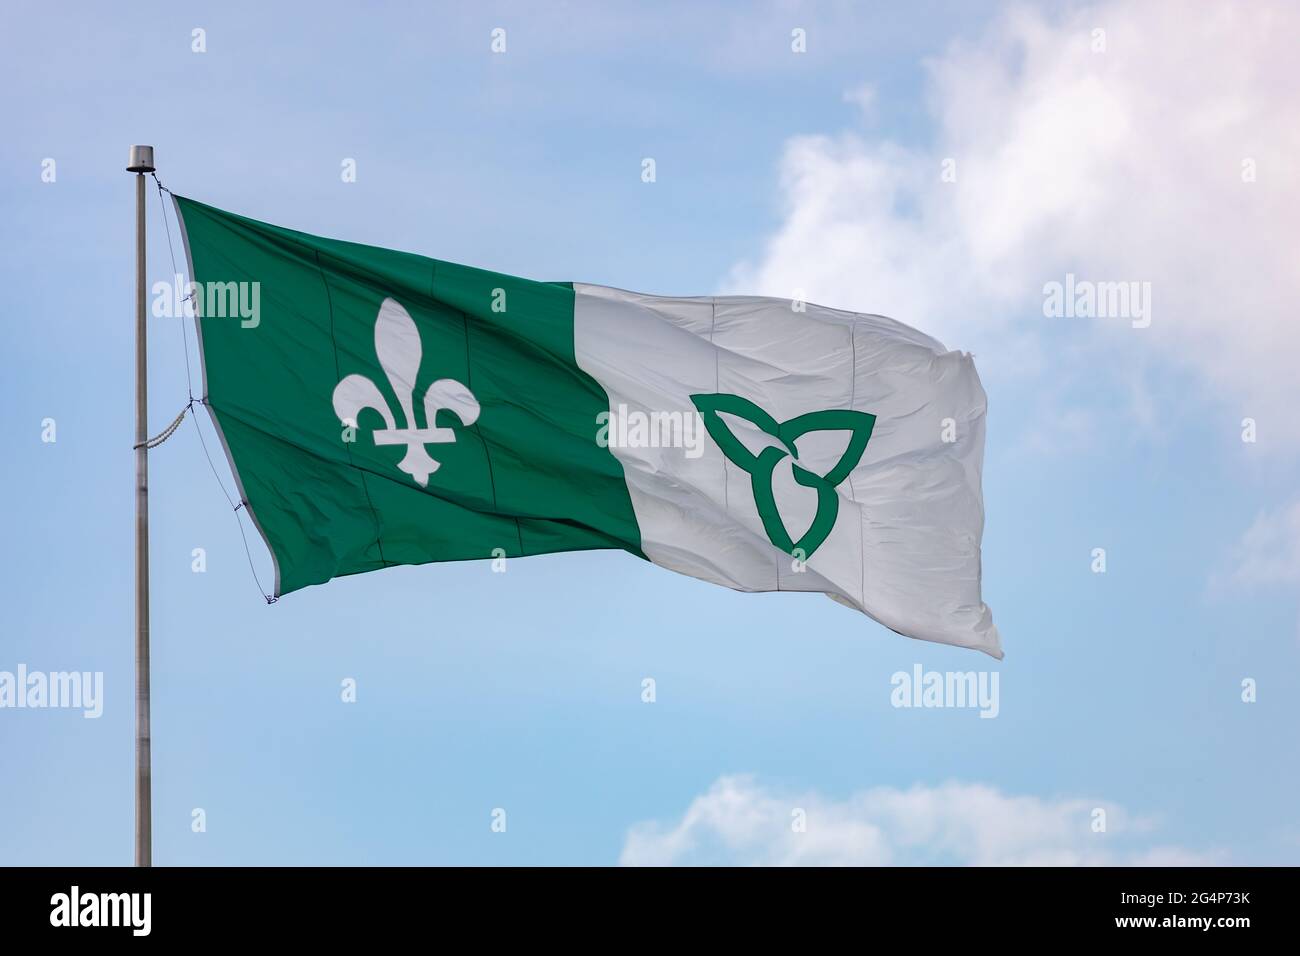 Hawkesbury, Ontario, Canada - 21 giugno 2021: La bandiera franco-ontaria, che rappresenta il patrimonio francese canadese in alcune parti dell'Ontario, vola su un palo Foto Stock